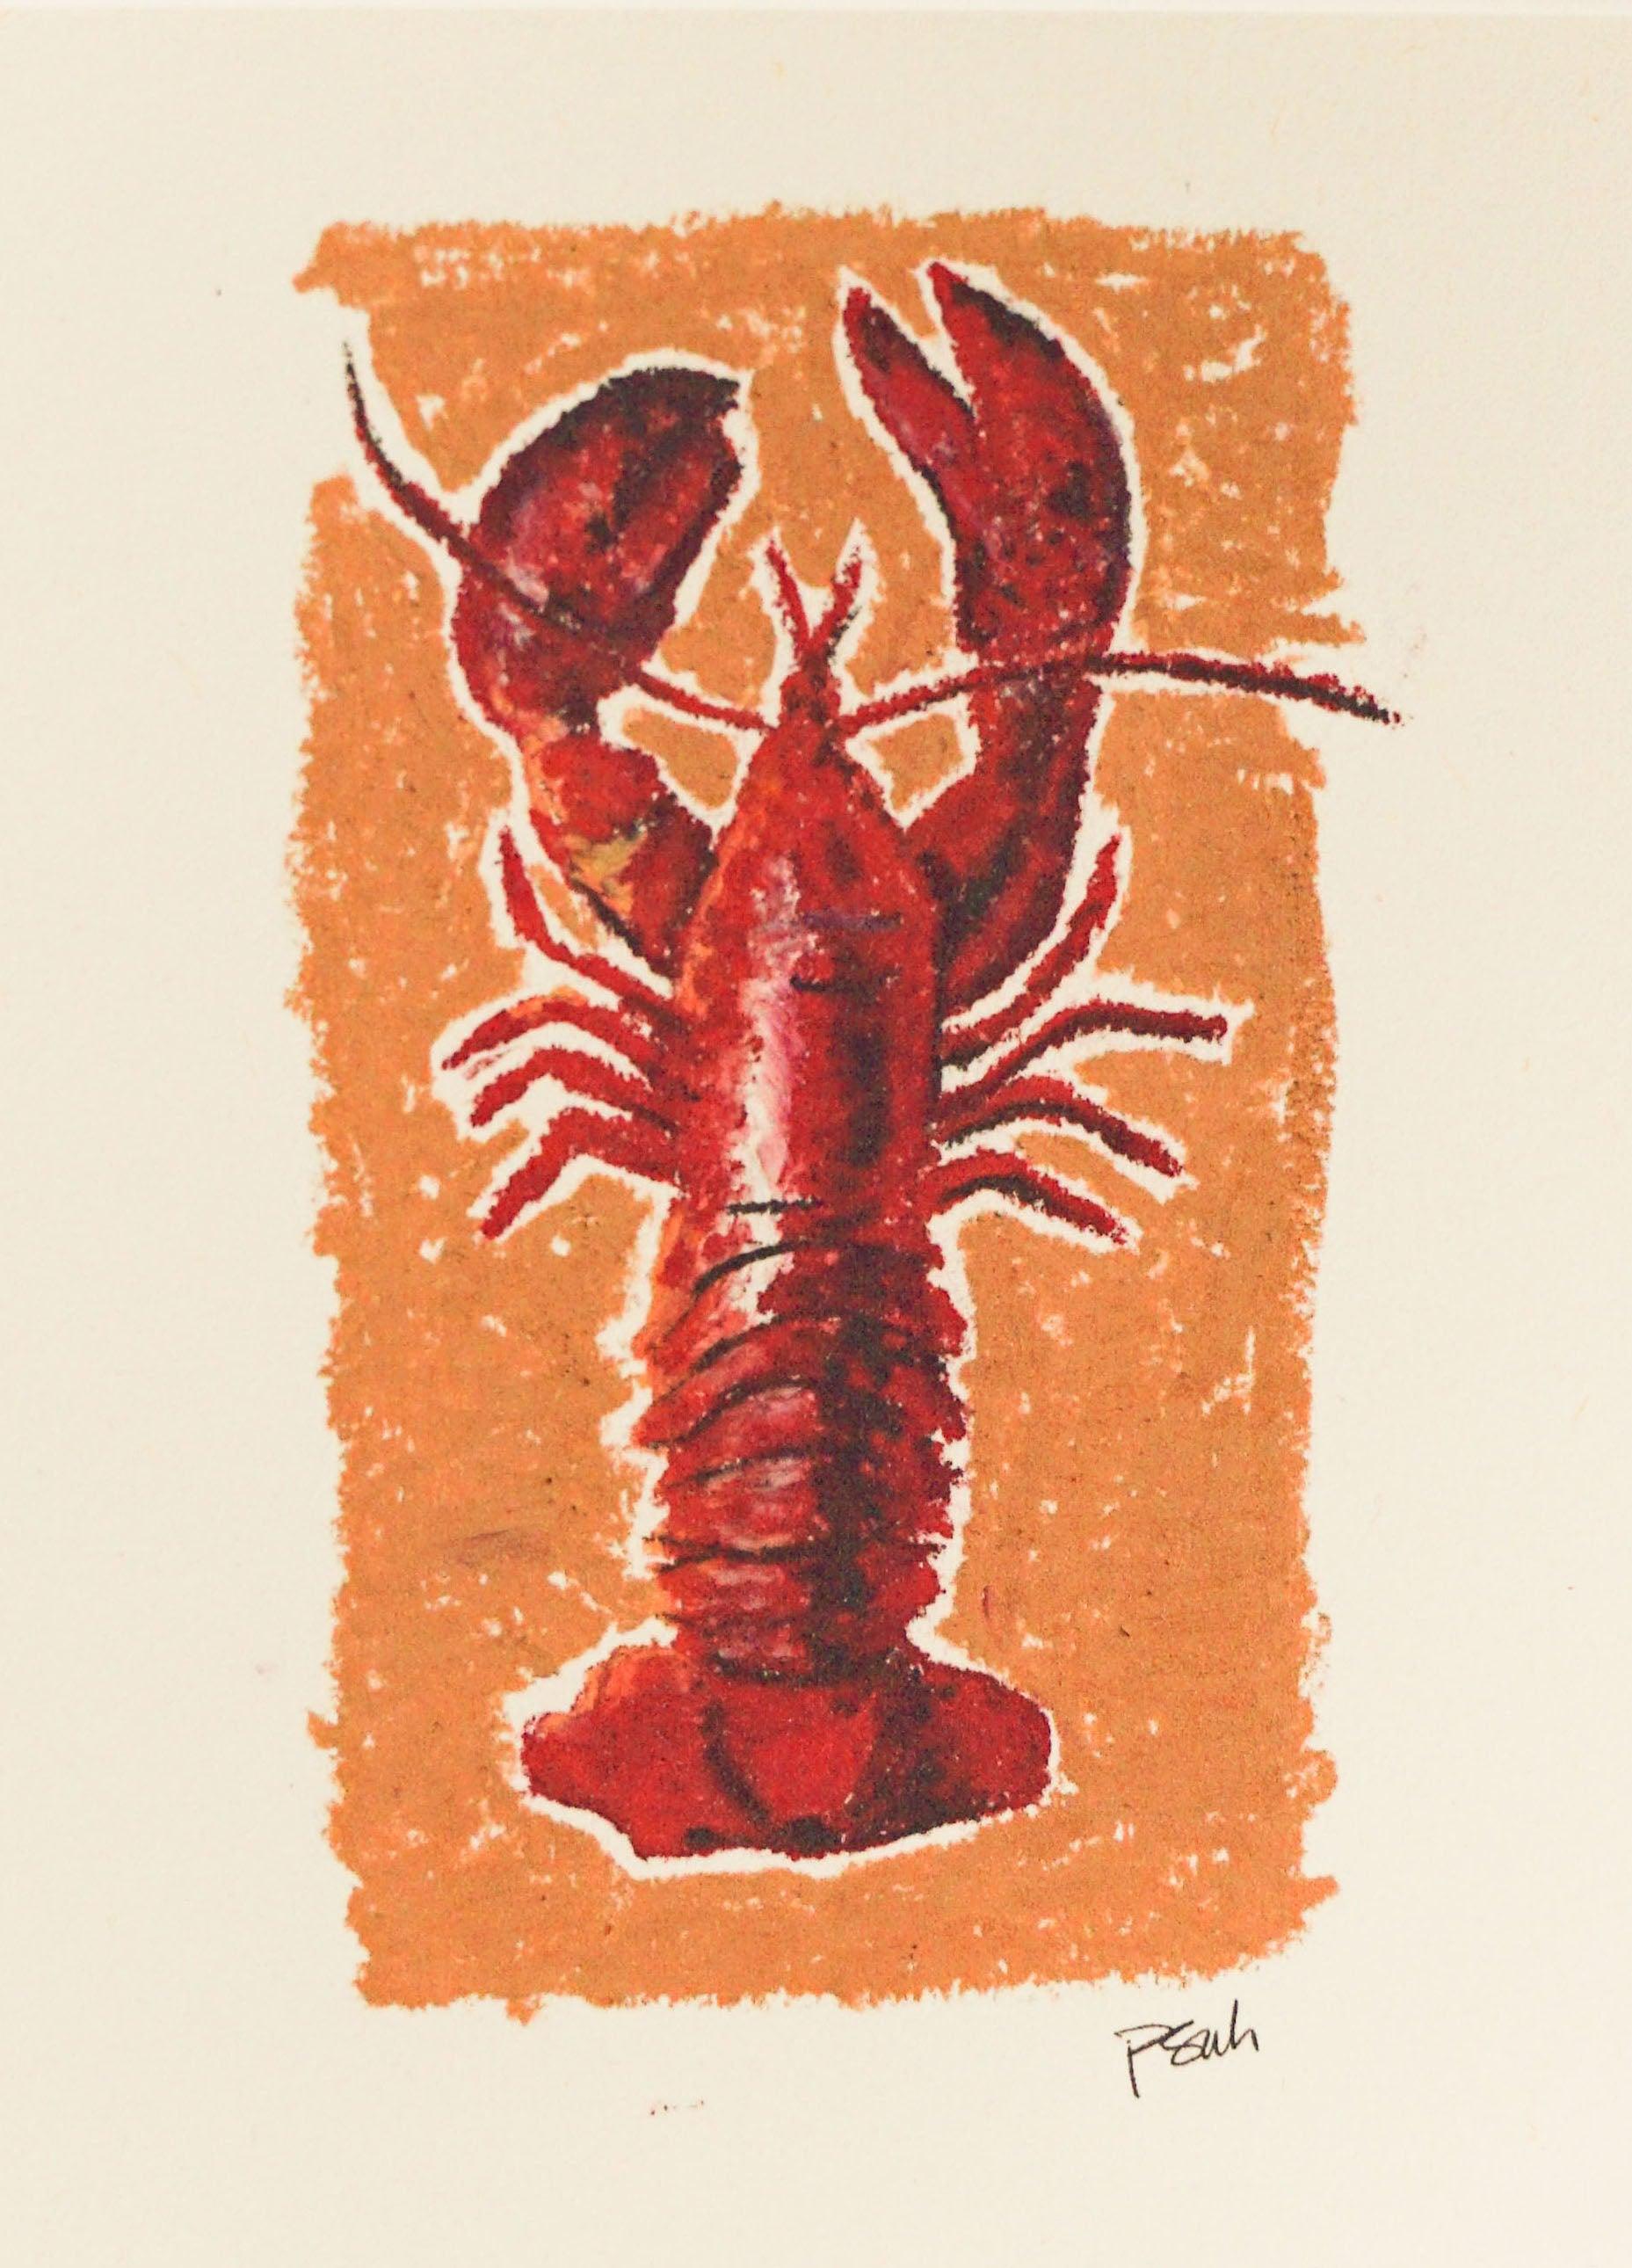 Lobster Print - 11x8.5 inch - Starfruit Prints